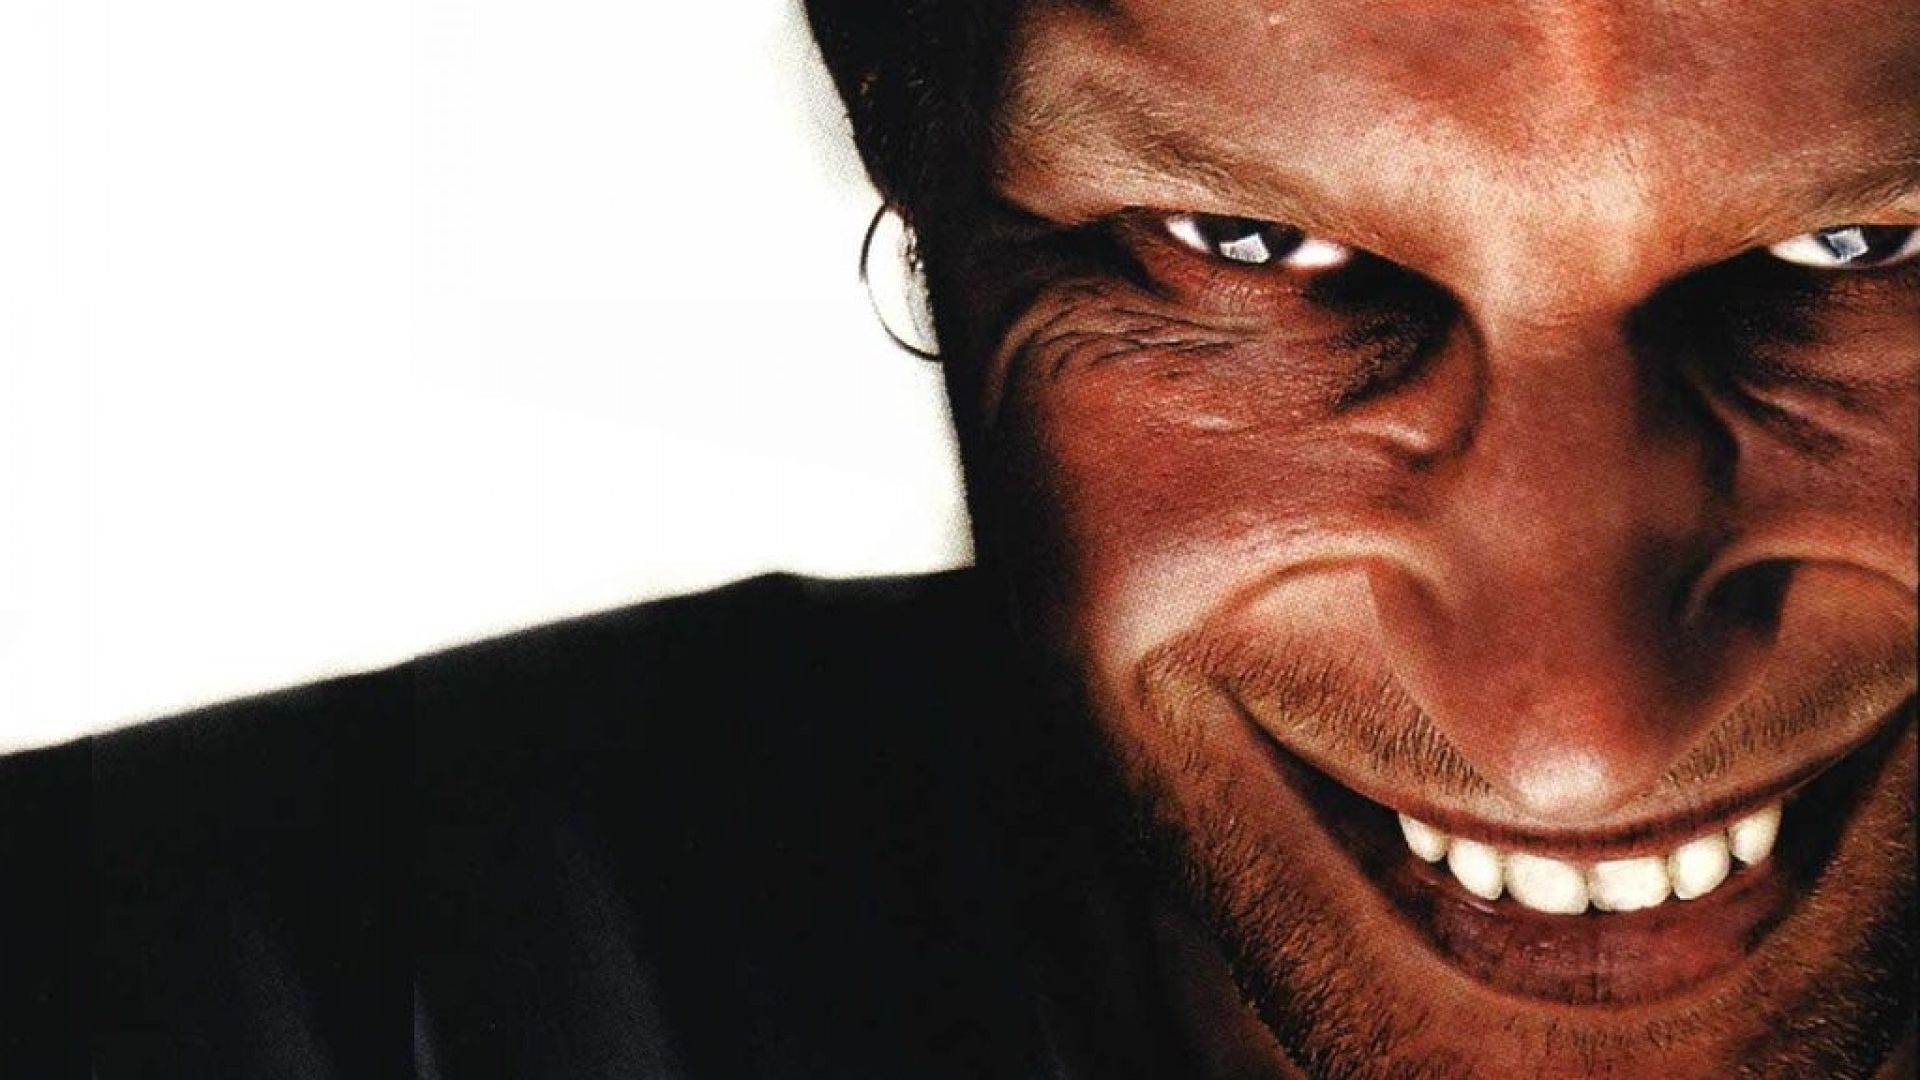 Desktop Wallpaper Musician Aphex Twin Face Hd Image Picture Background  Clmxui